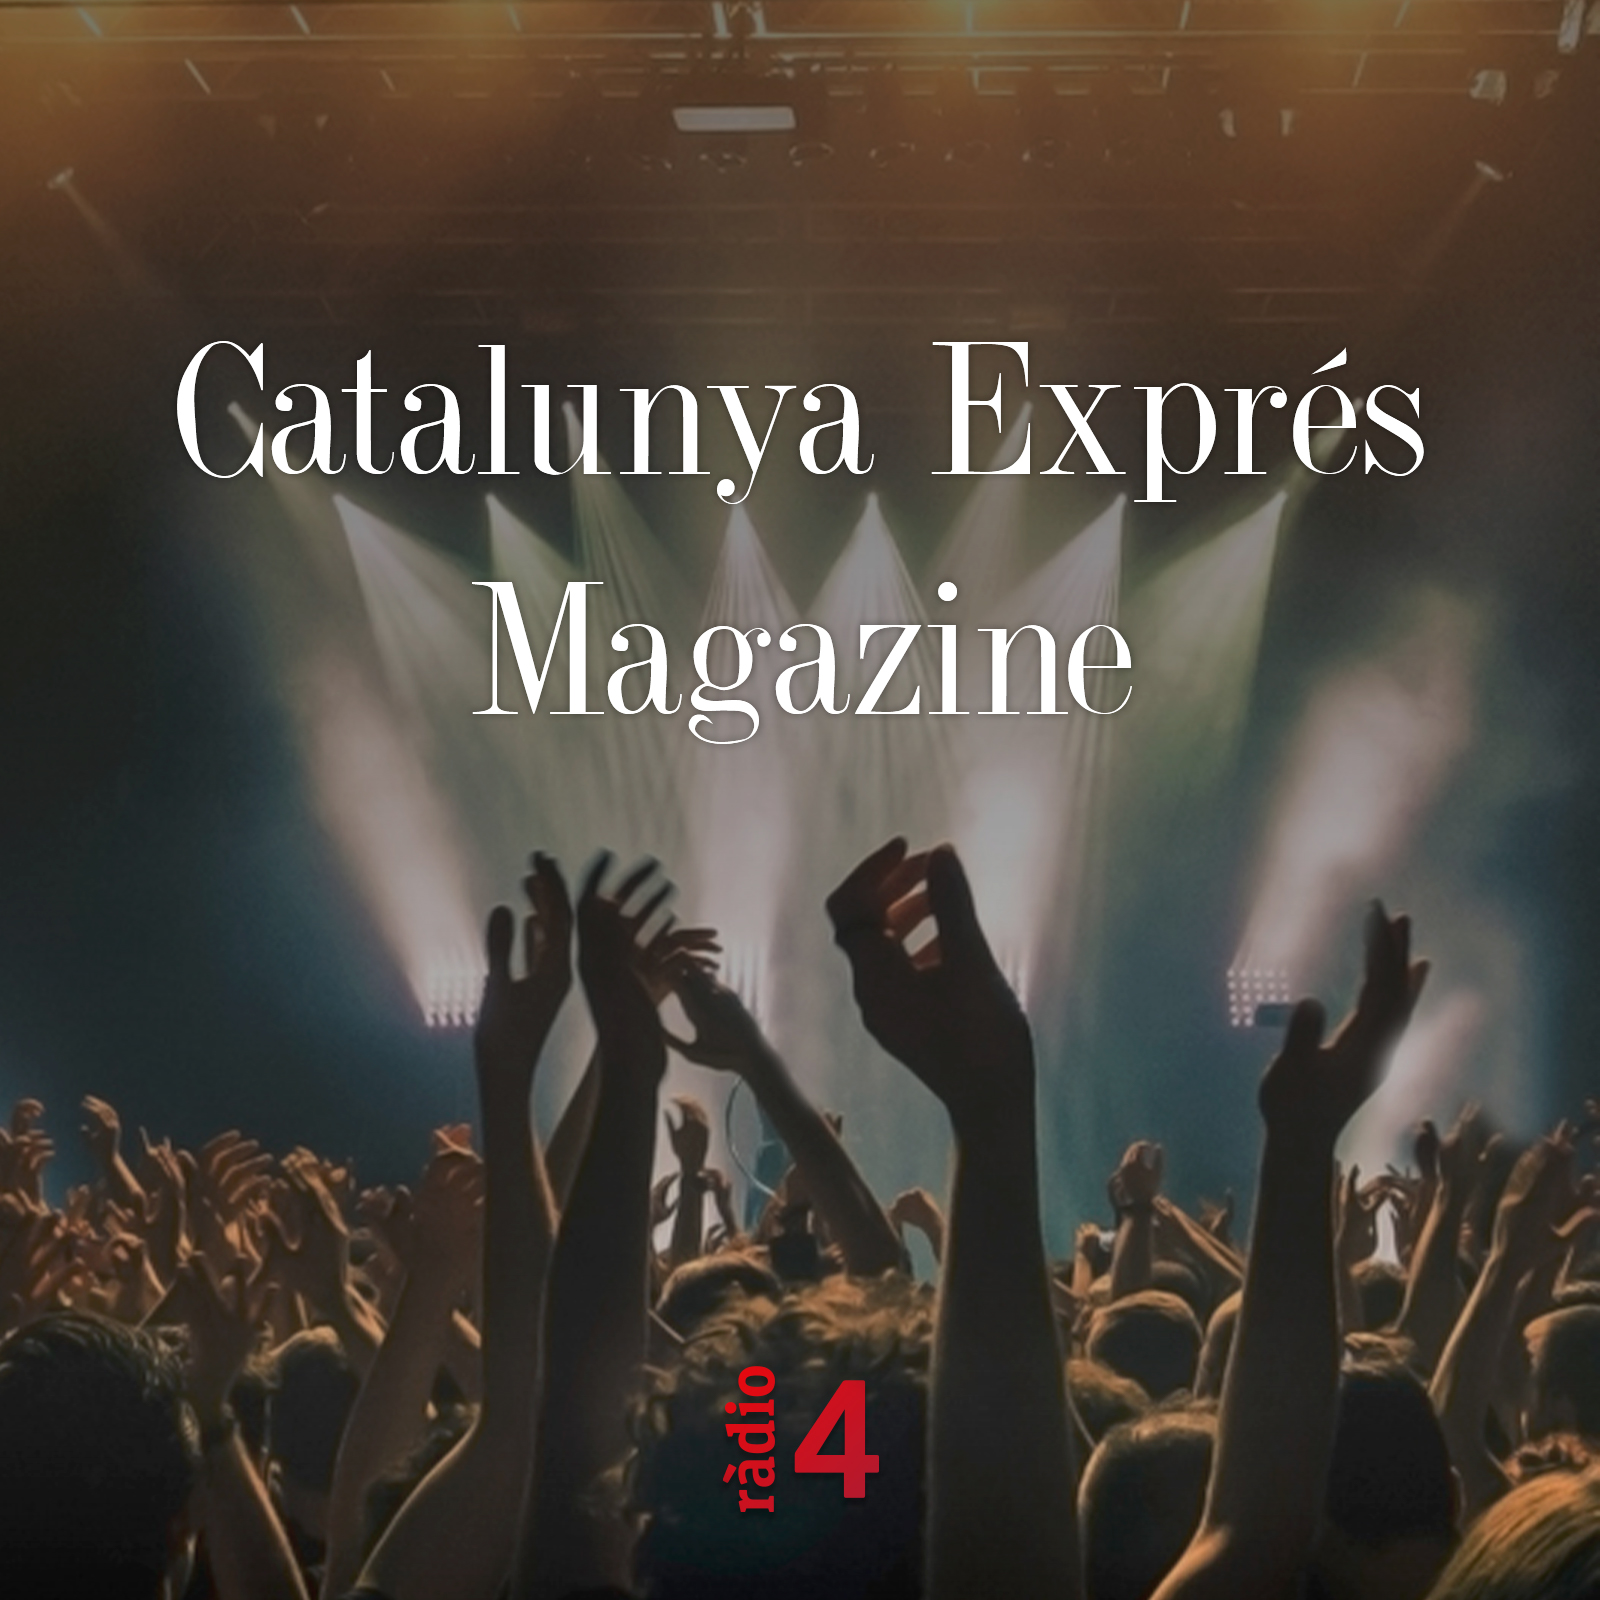 Catalunya Exprés Magazine